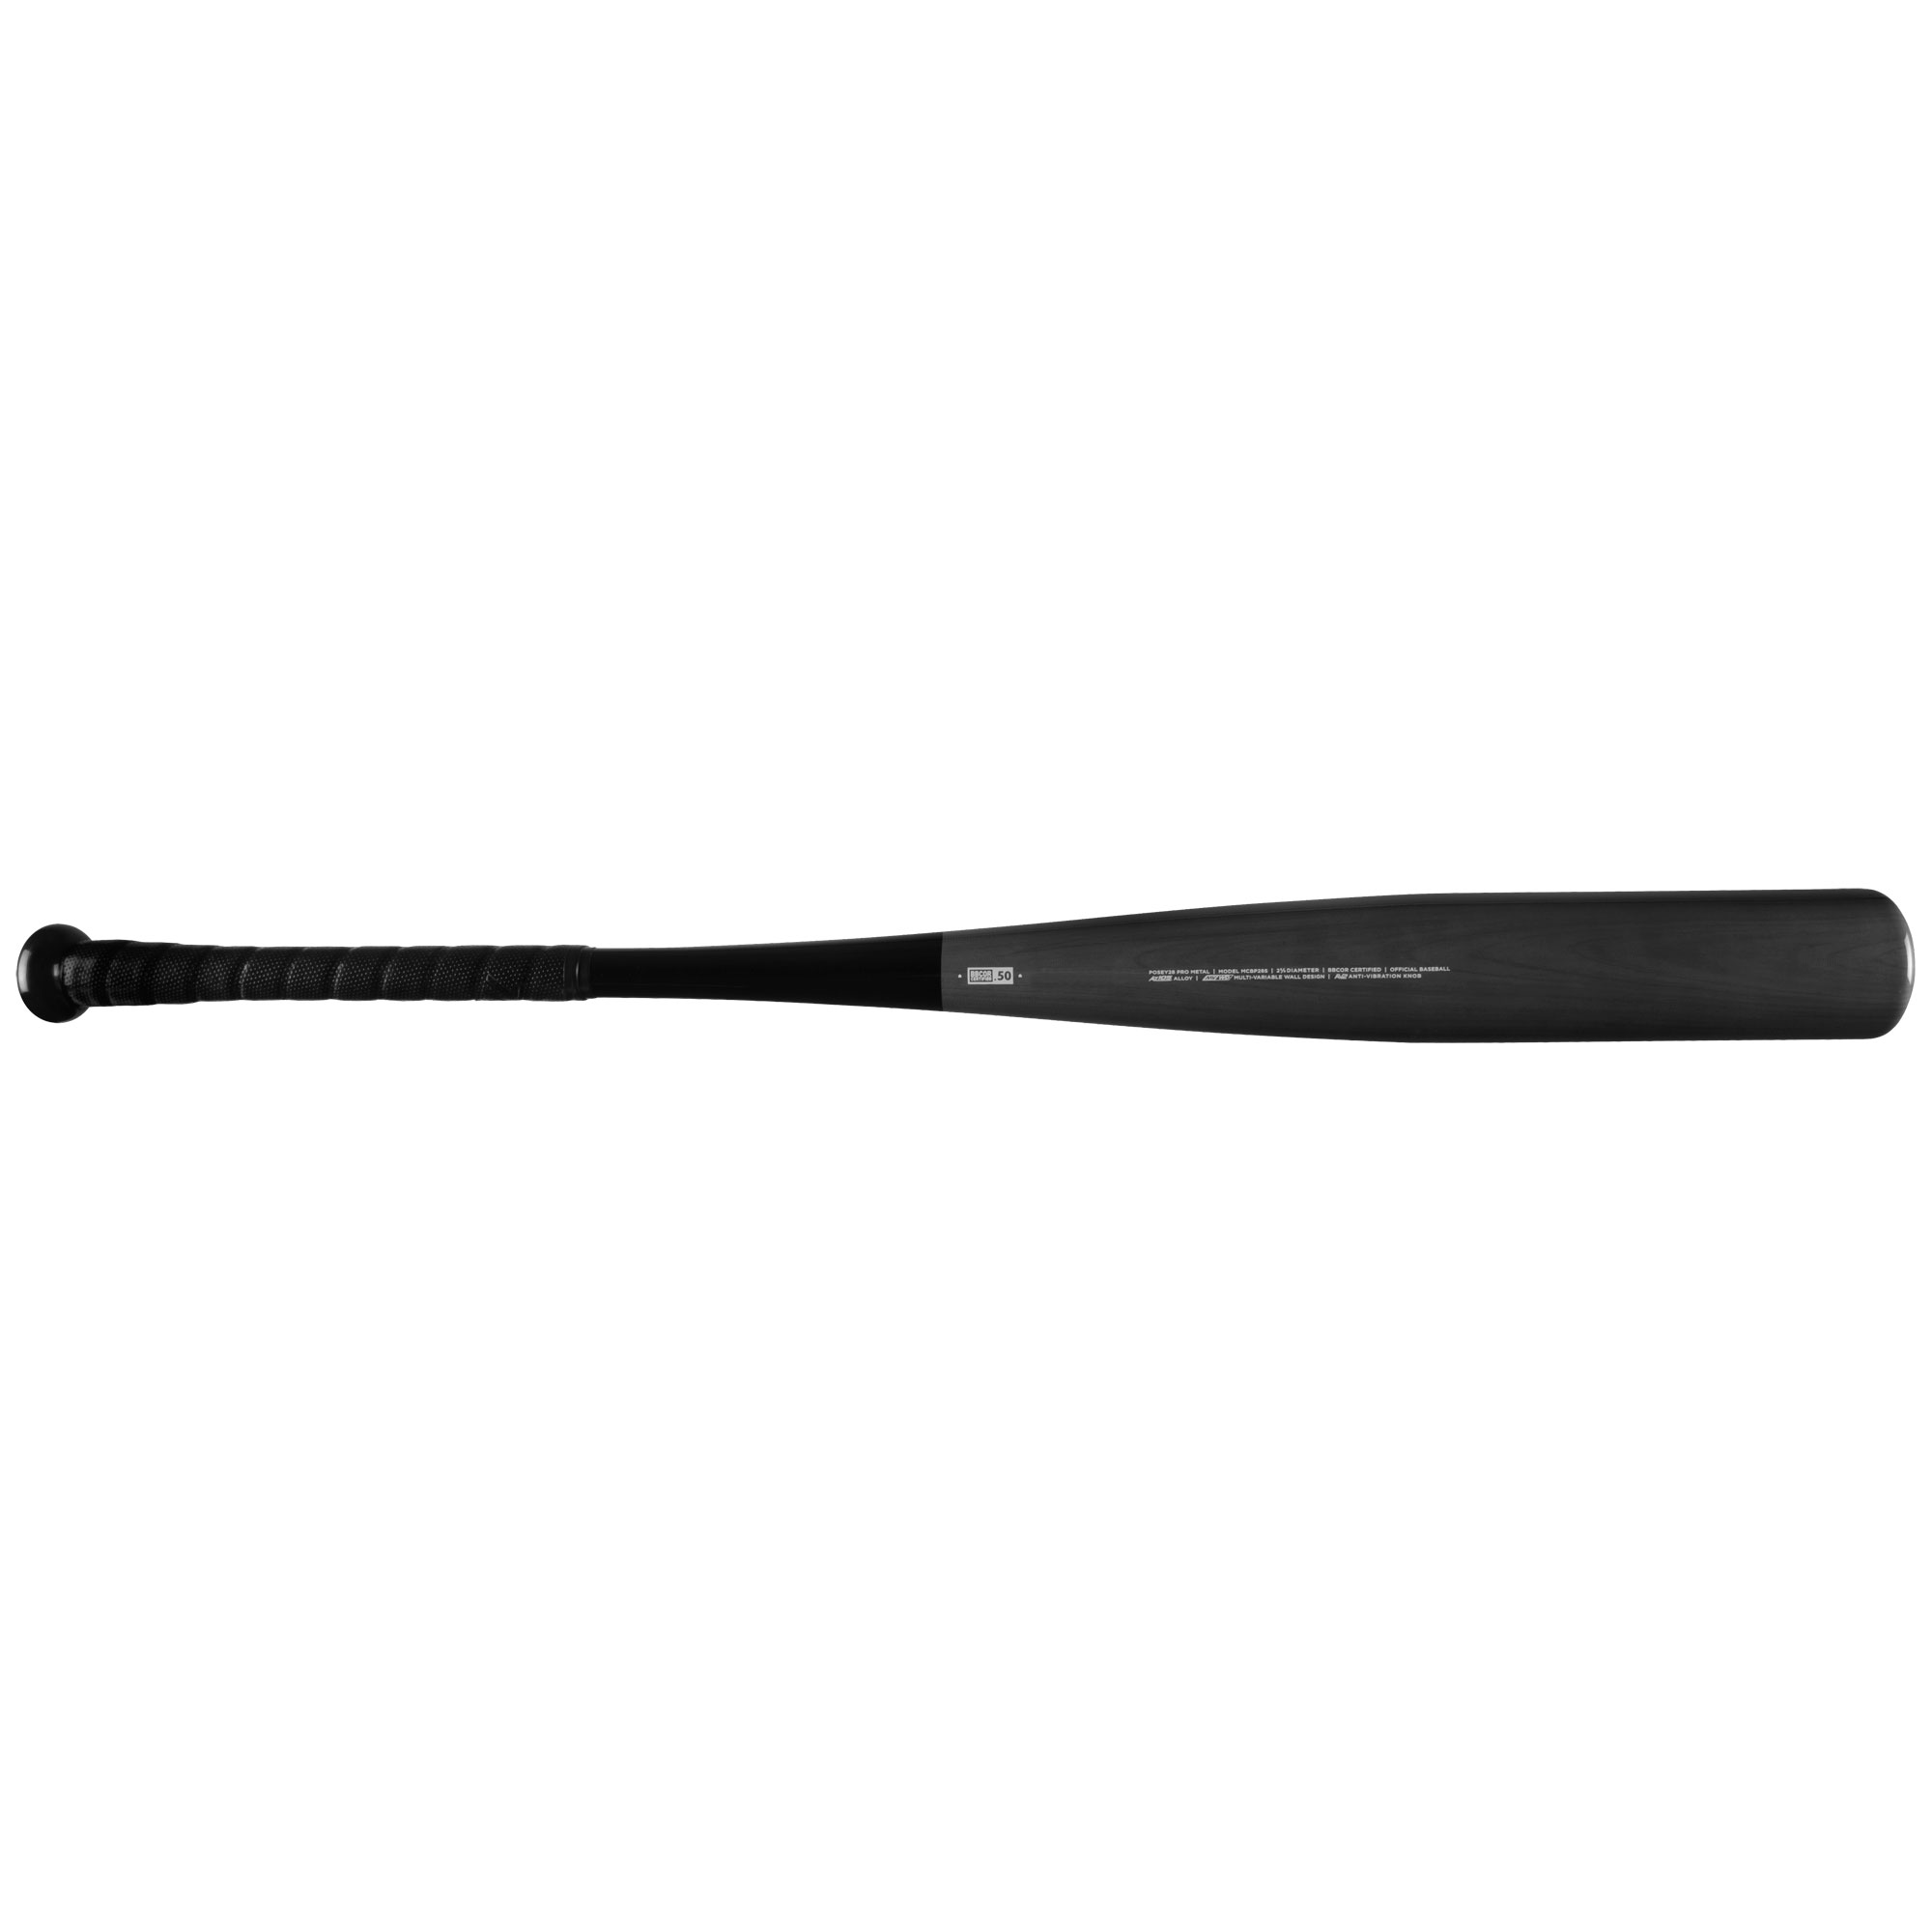 Marucci Posey 28 BBCOR (-3) MCBP28S Adult Baseball Bat - image 2 of 4